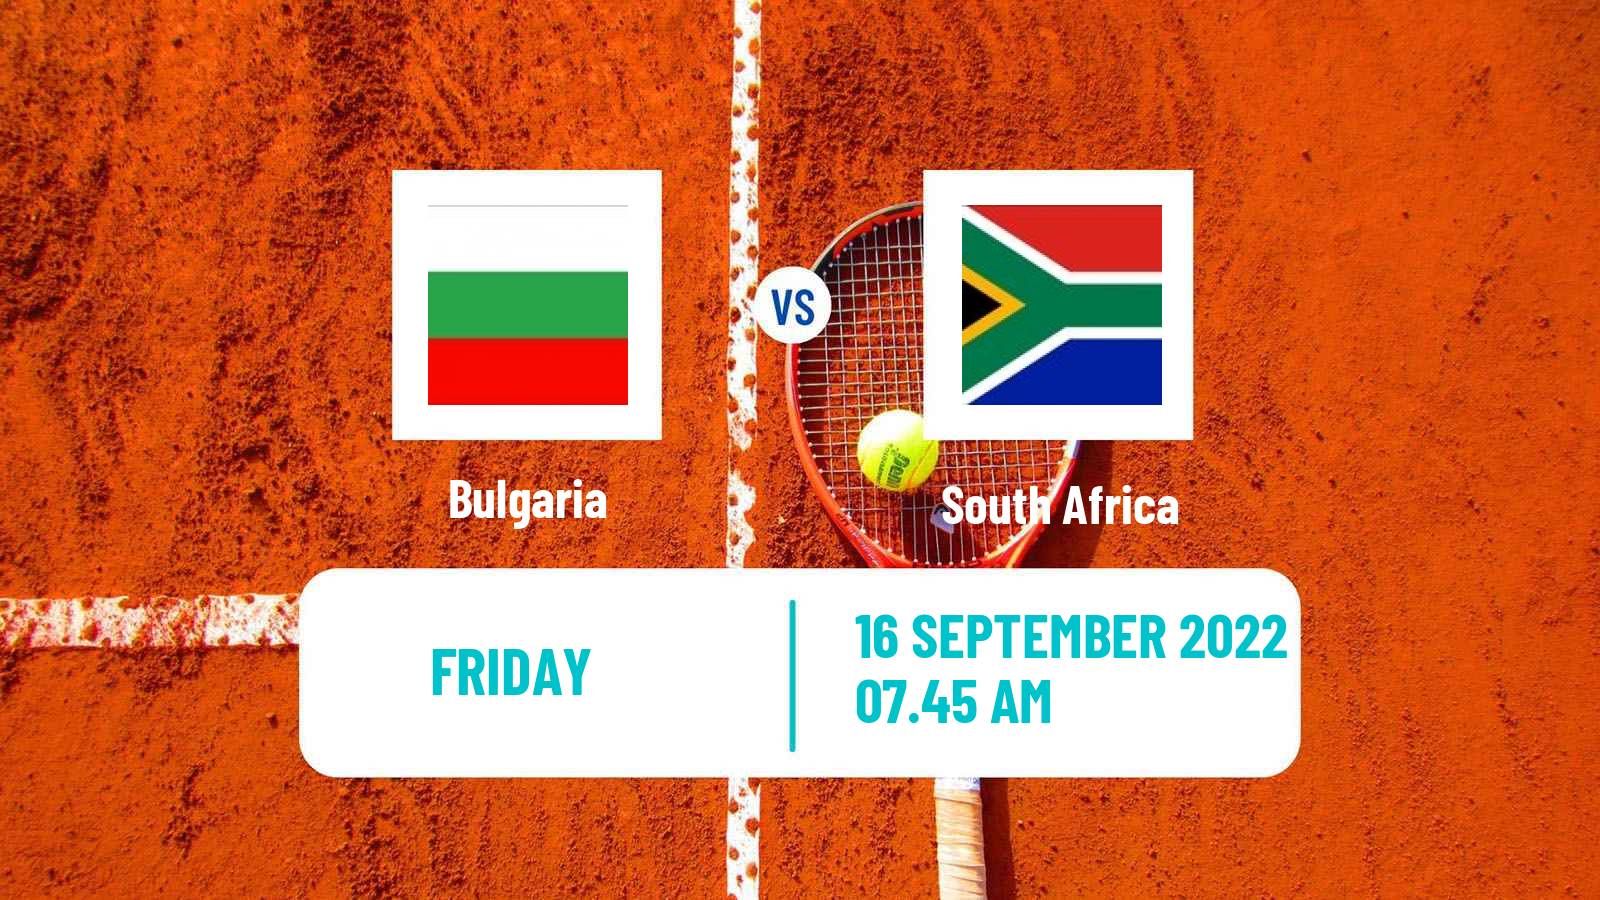 Tennis Davis Cup World Group II Teams Bulgaria - South Africa